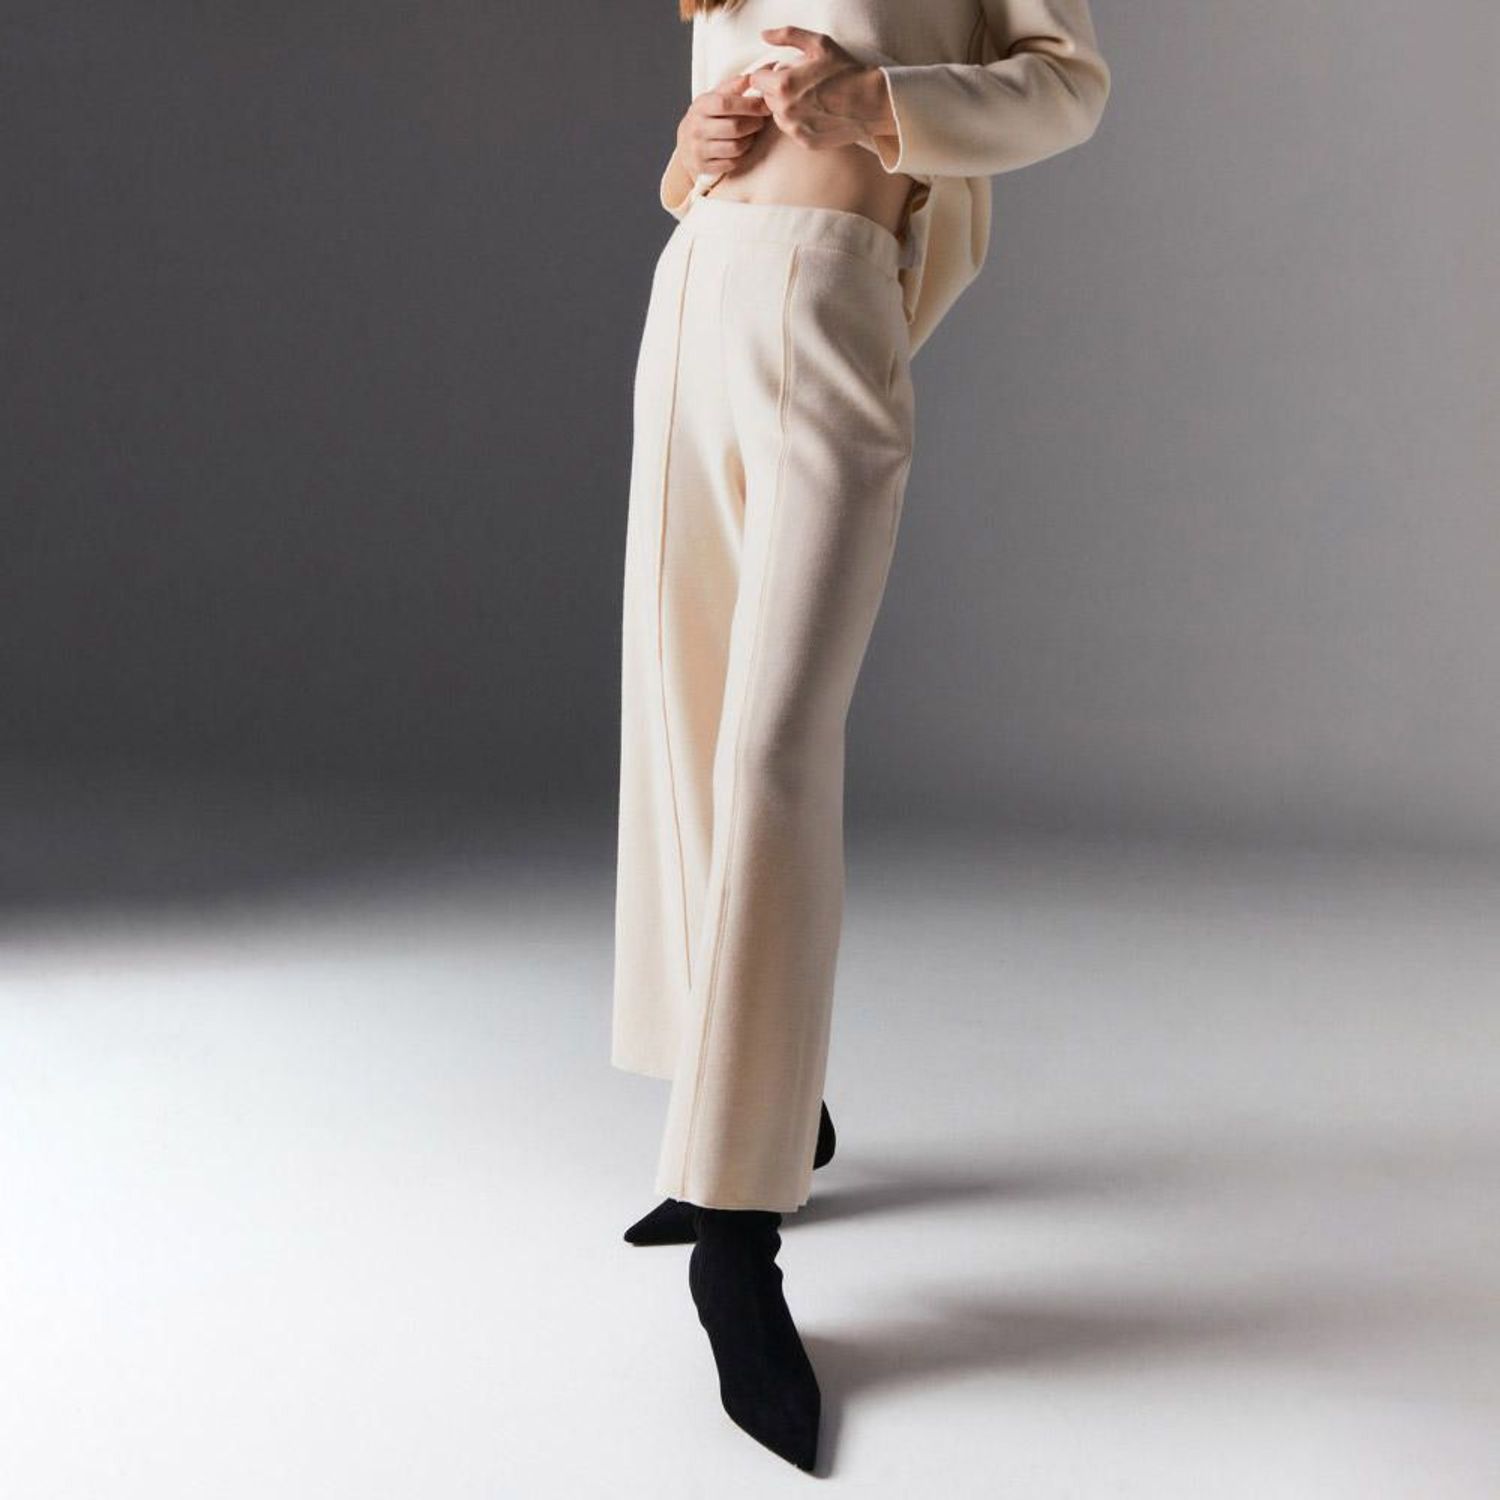 Pantalon Sfera Mujer Soft Blanco Blanco | Oechsle.pe Oechsle